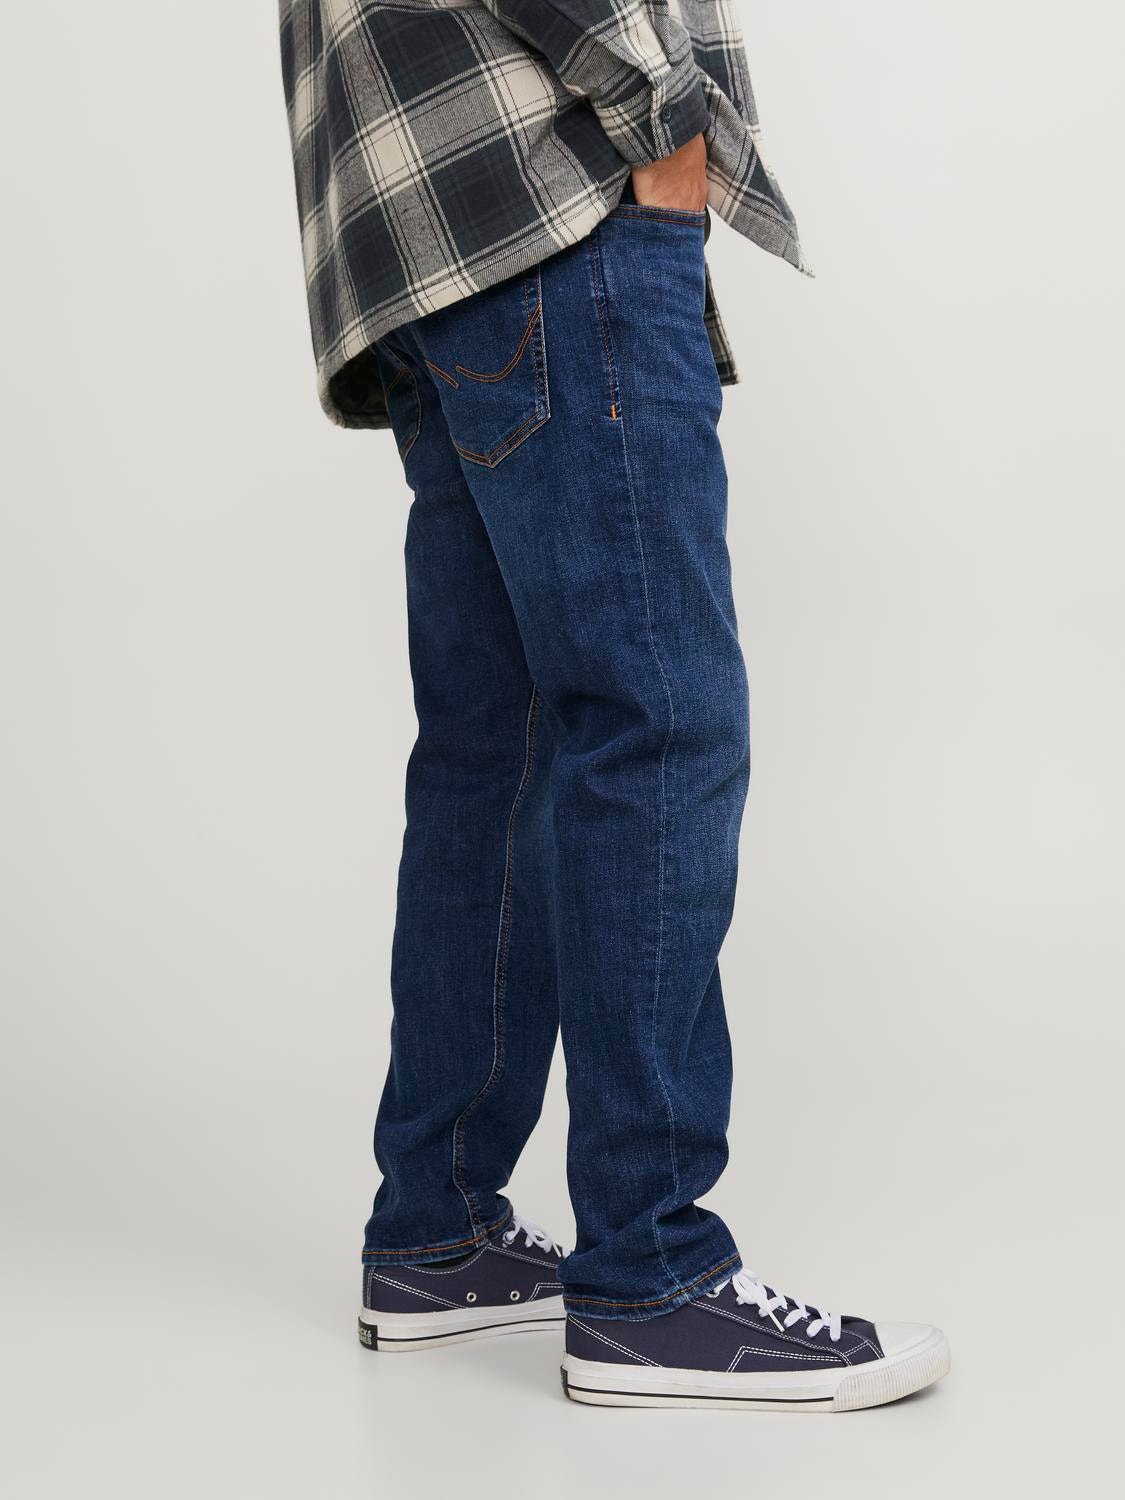 JJIMIKE JJORIGINAL AM fit | | Medium 814 NOOS Tapered Jones® & Jack Blue jeans